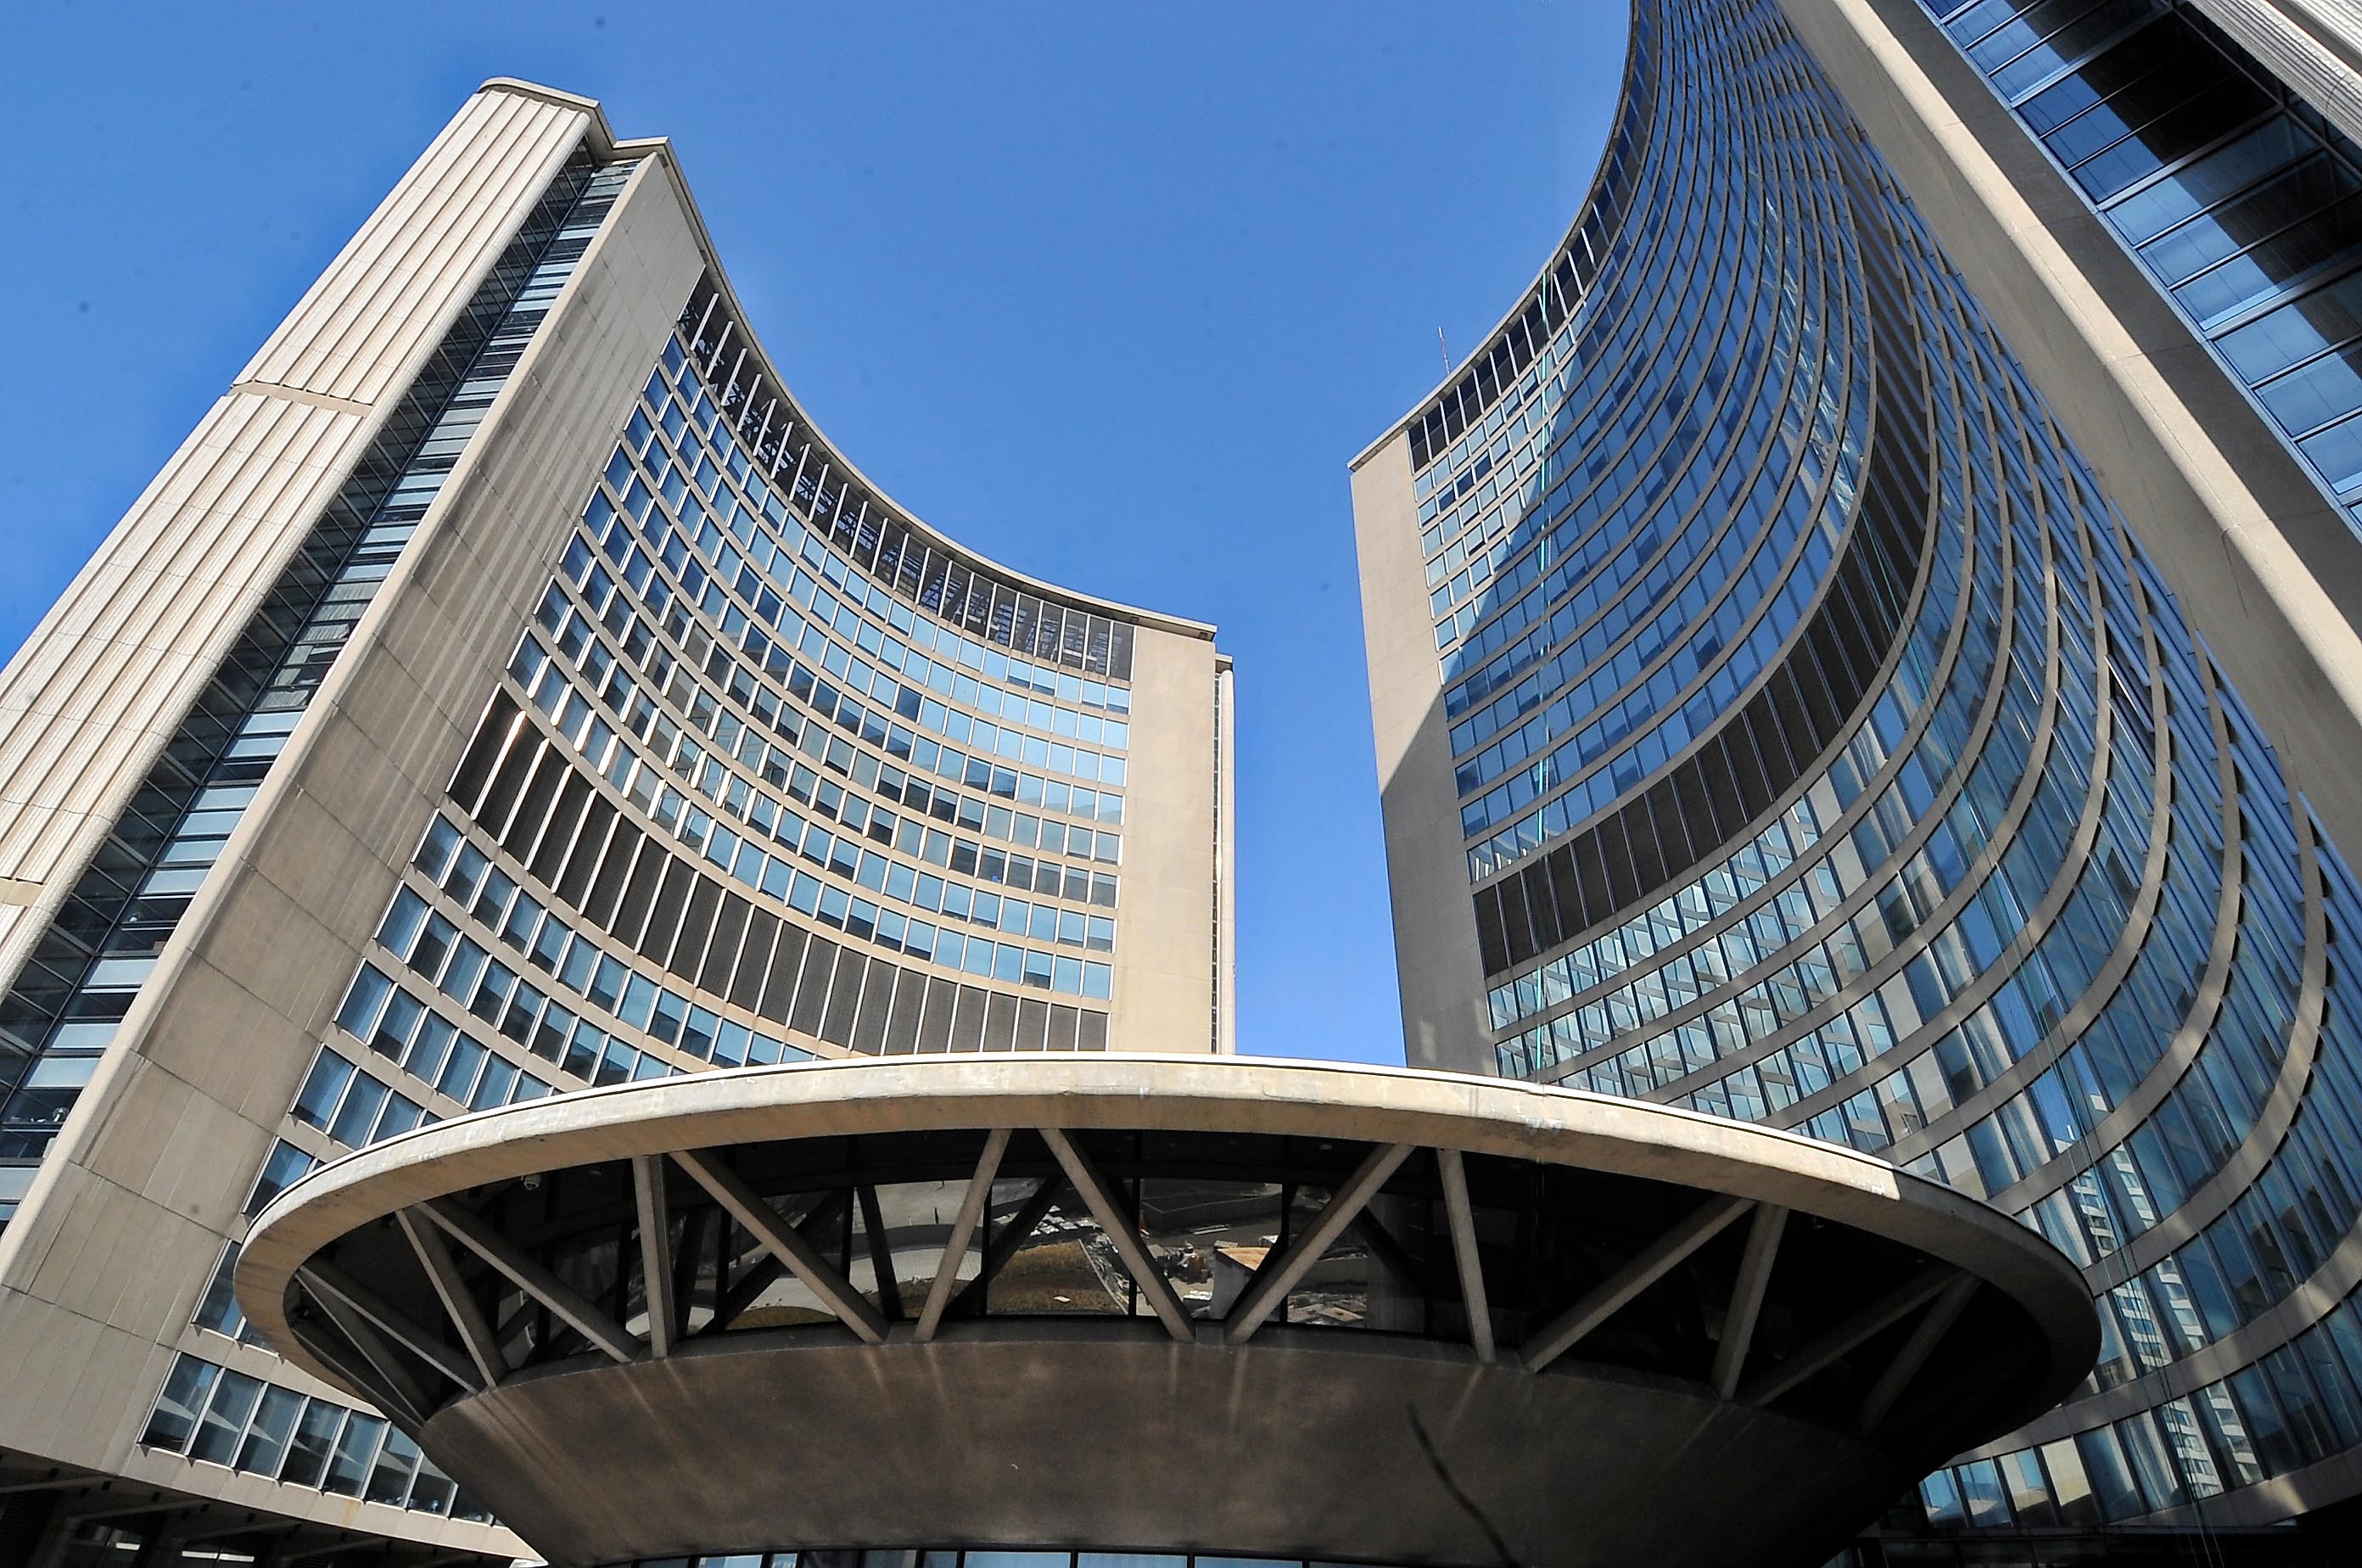 City Hall – City of Toronto